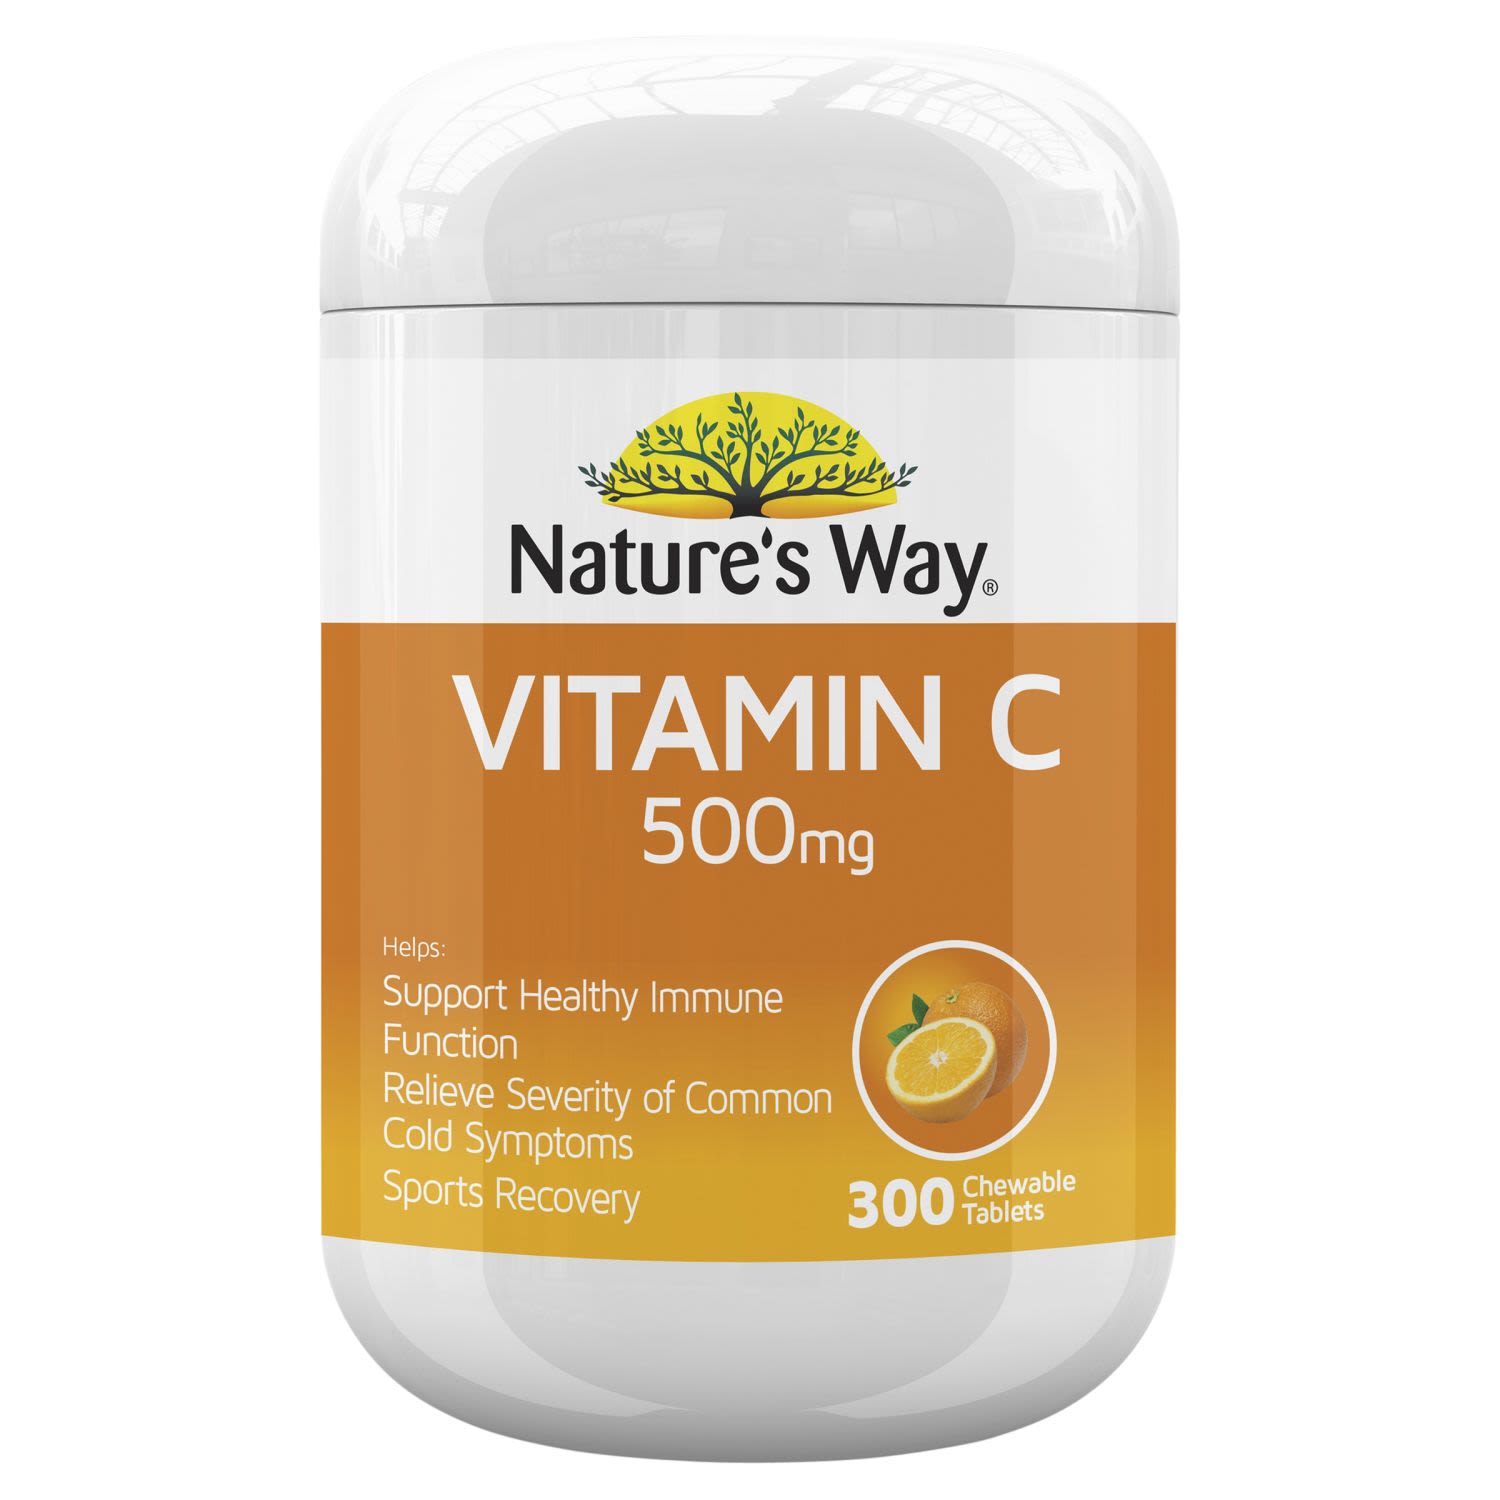 Nature's Way Vitamin C 500mg, 300 Each